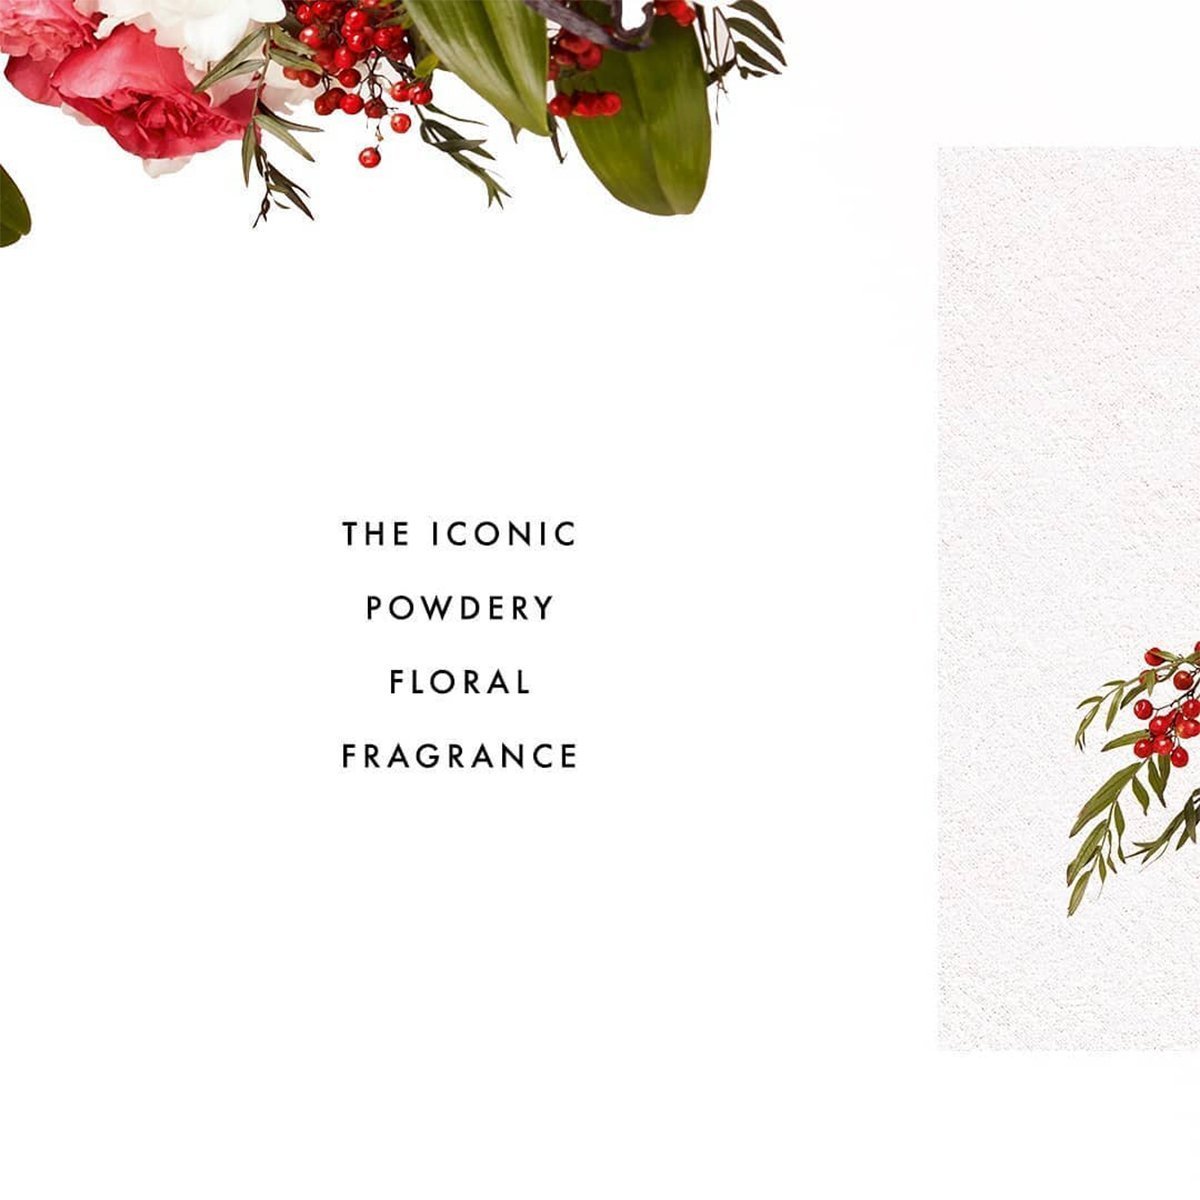 Kenzo Flower EDP Gift Set - My Perfume Shop Australia